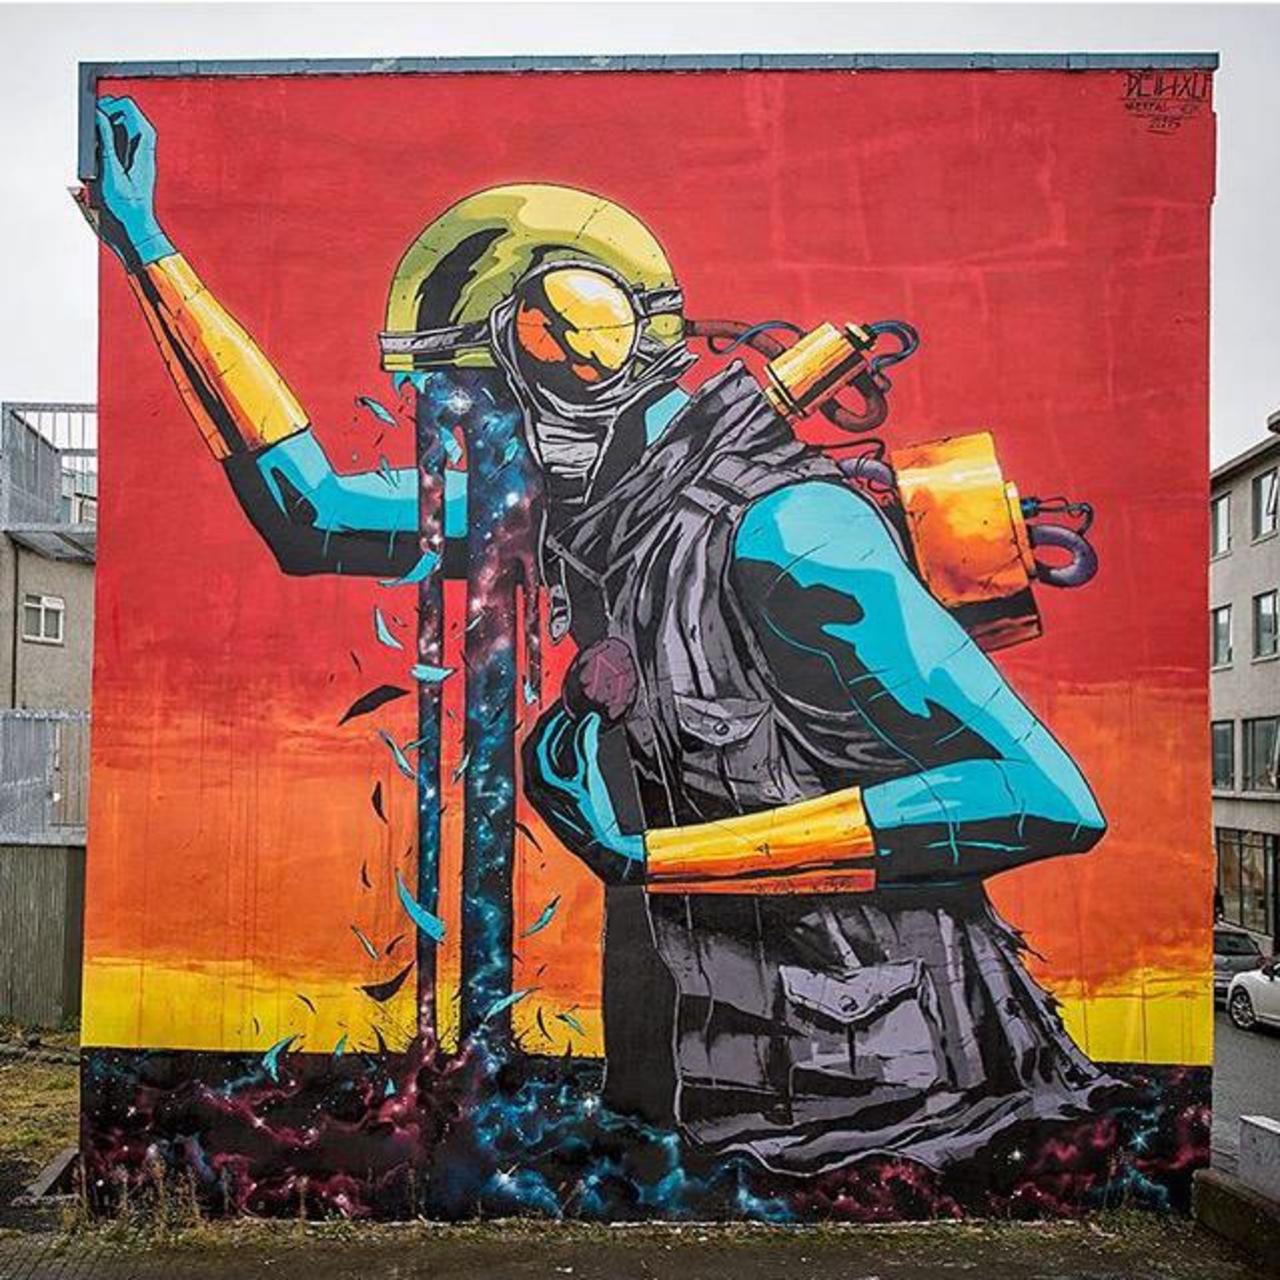 RT @GoogleStreetArt: Street Art by Deih in Reykjavik 

#art #graffiti #mural #streetart https://t.co/W6Ona2Czg8